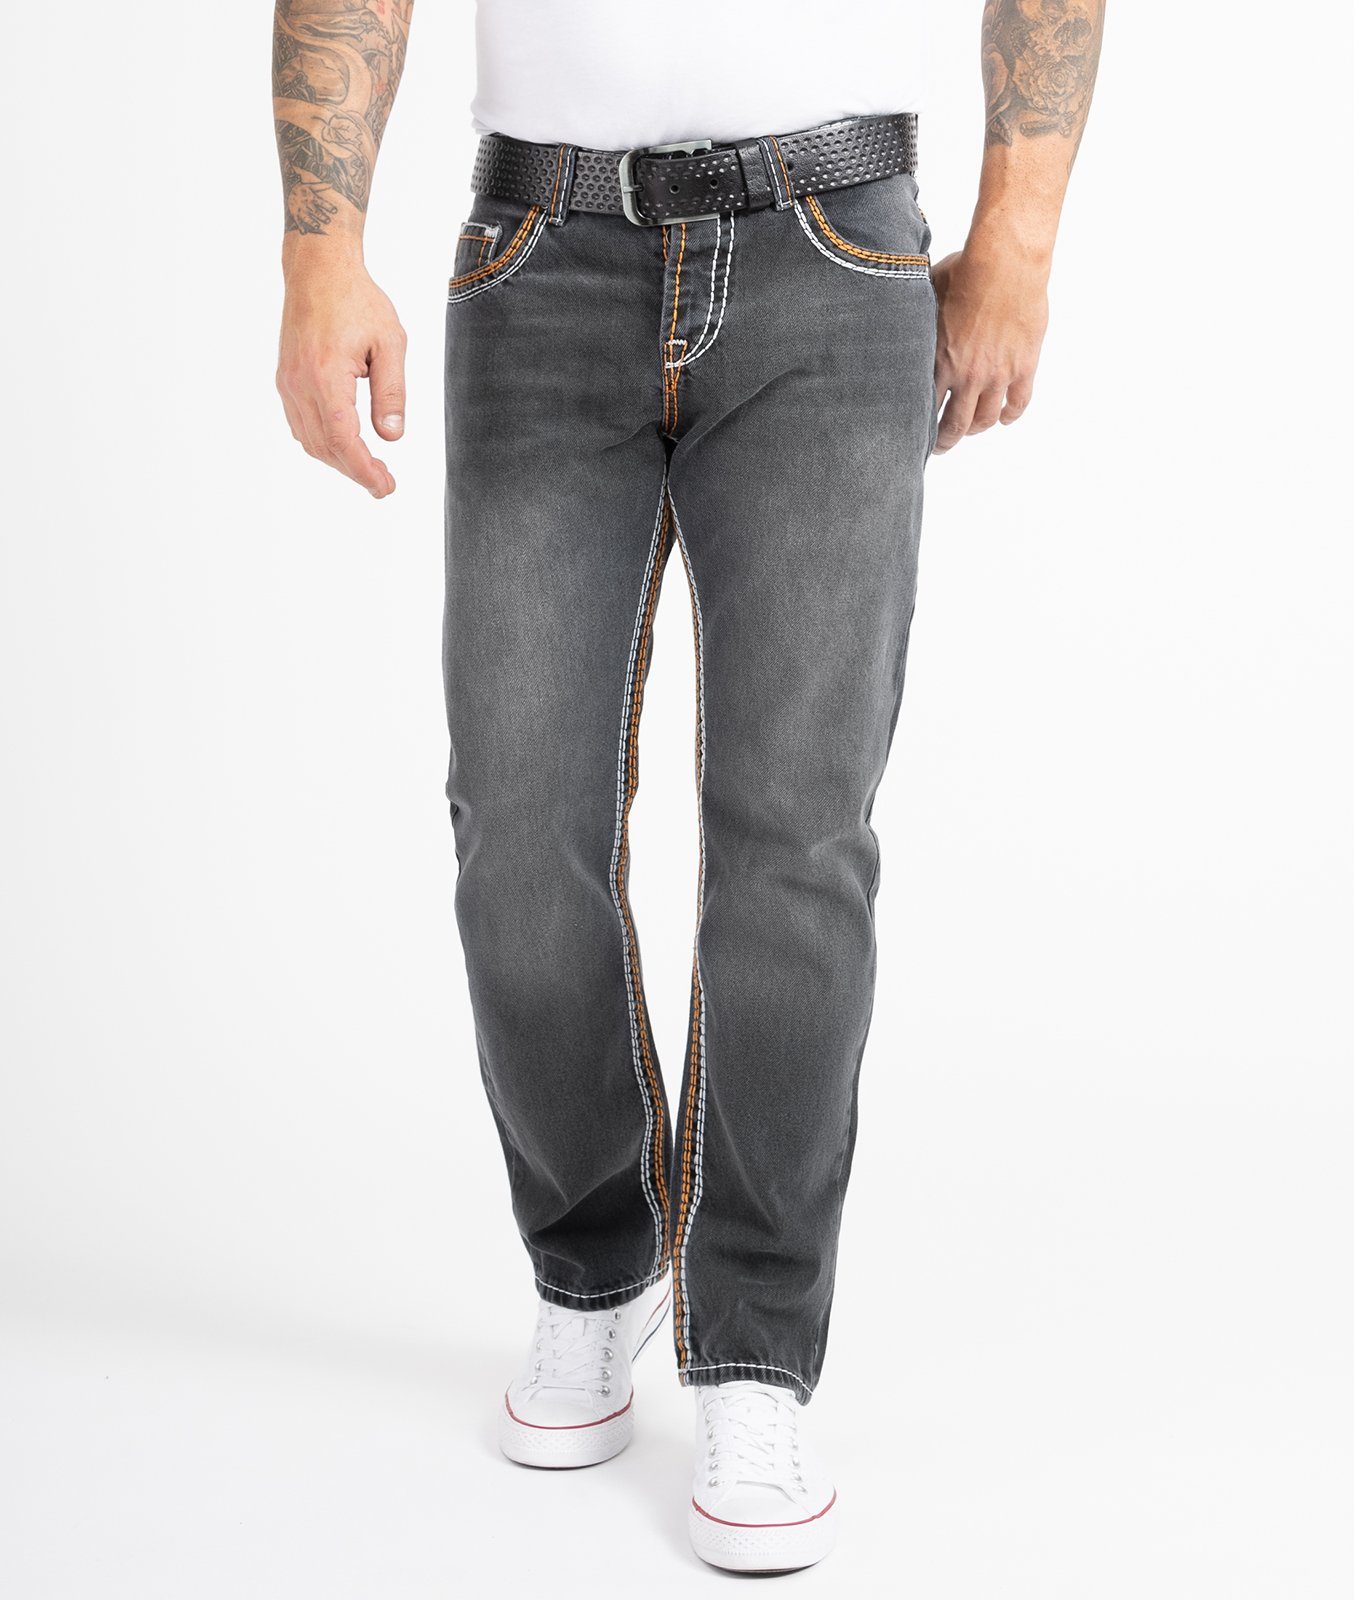 Jeans Straight-Jeans dicke RC-2168 Rock Creek Herren Comfort Fit Nähte